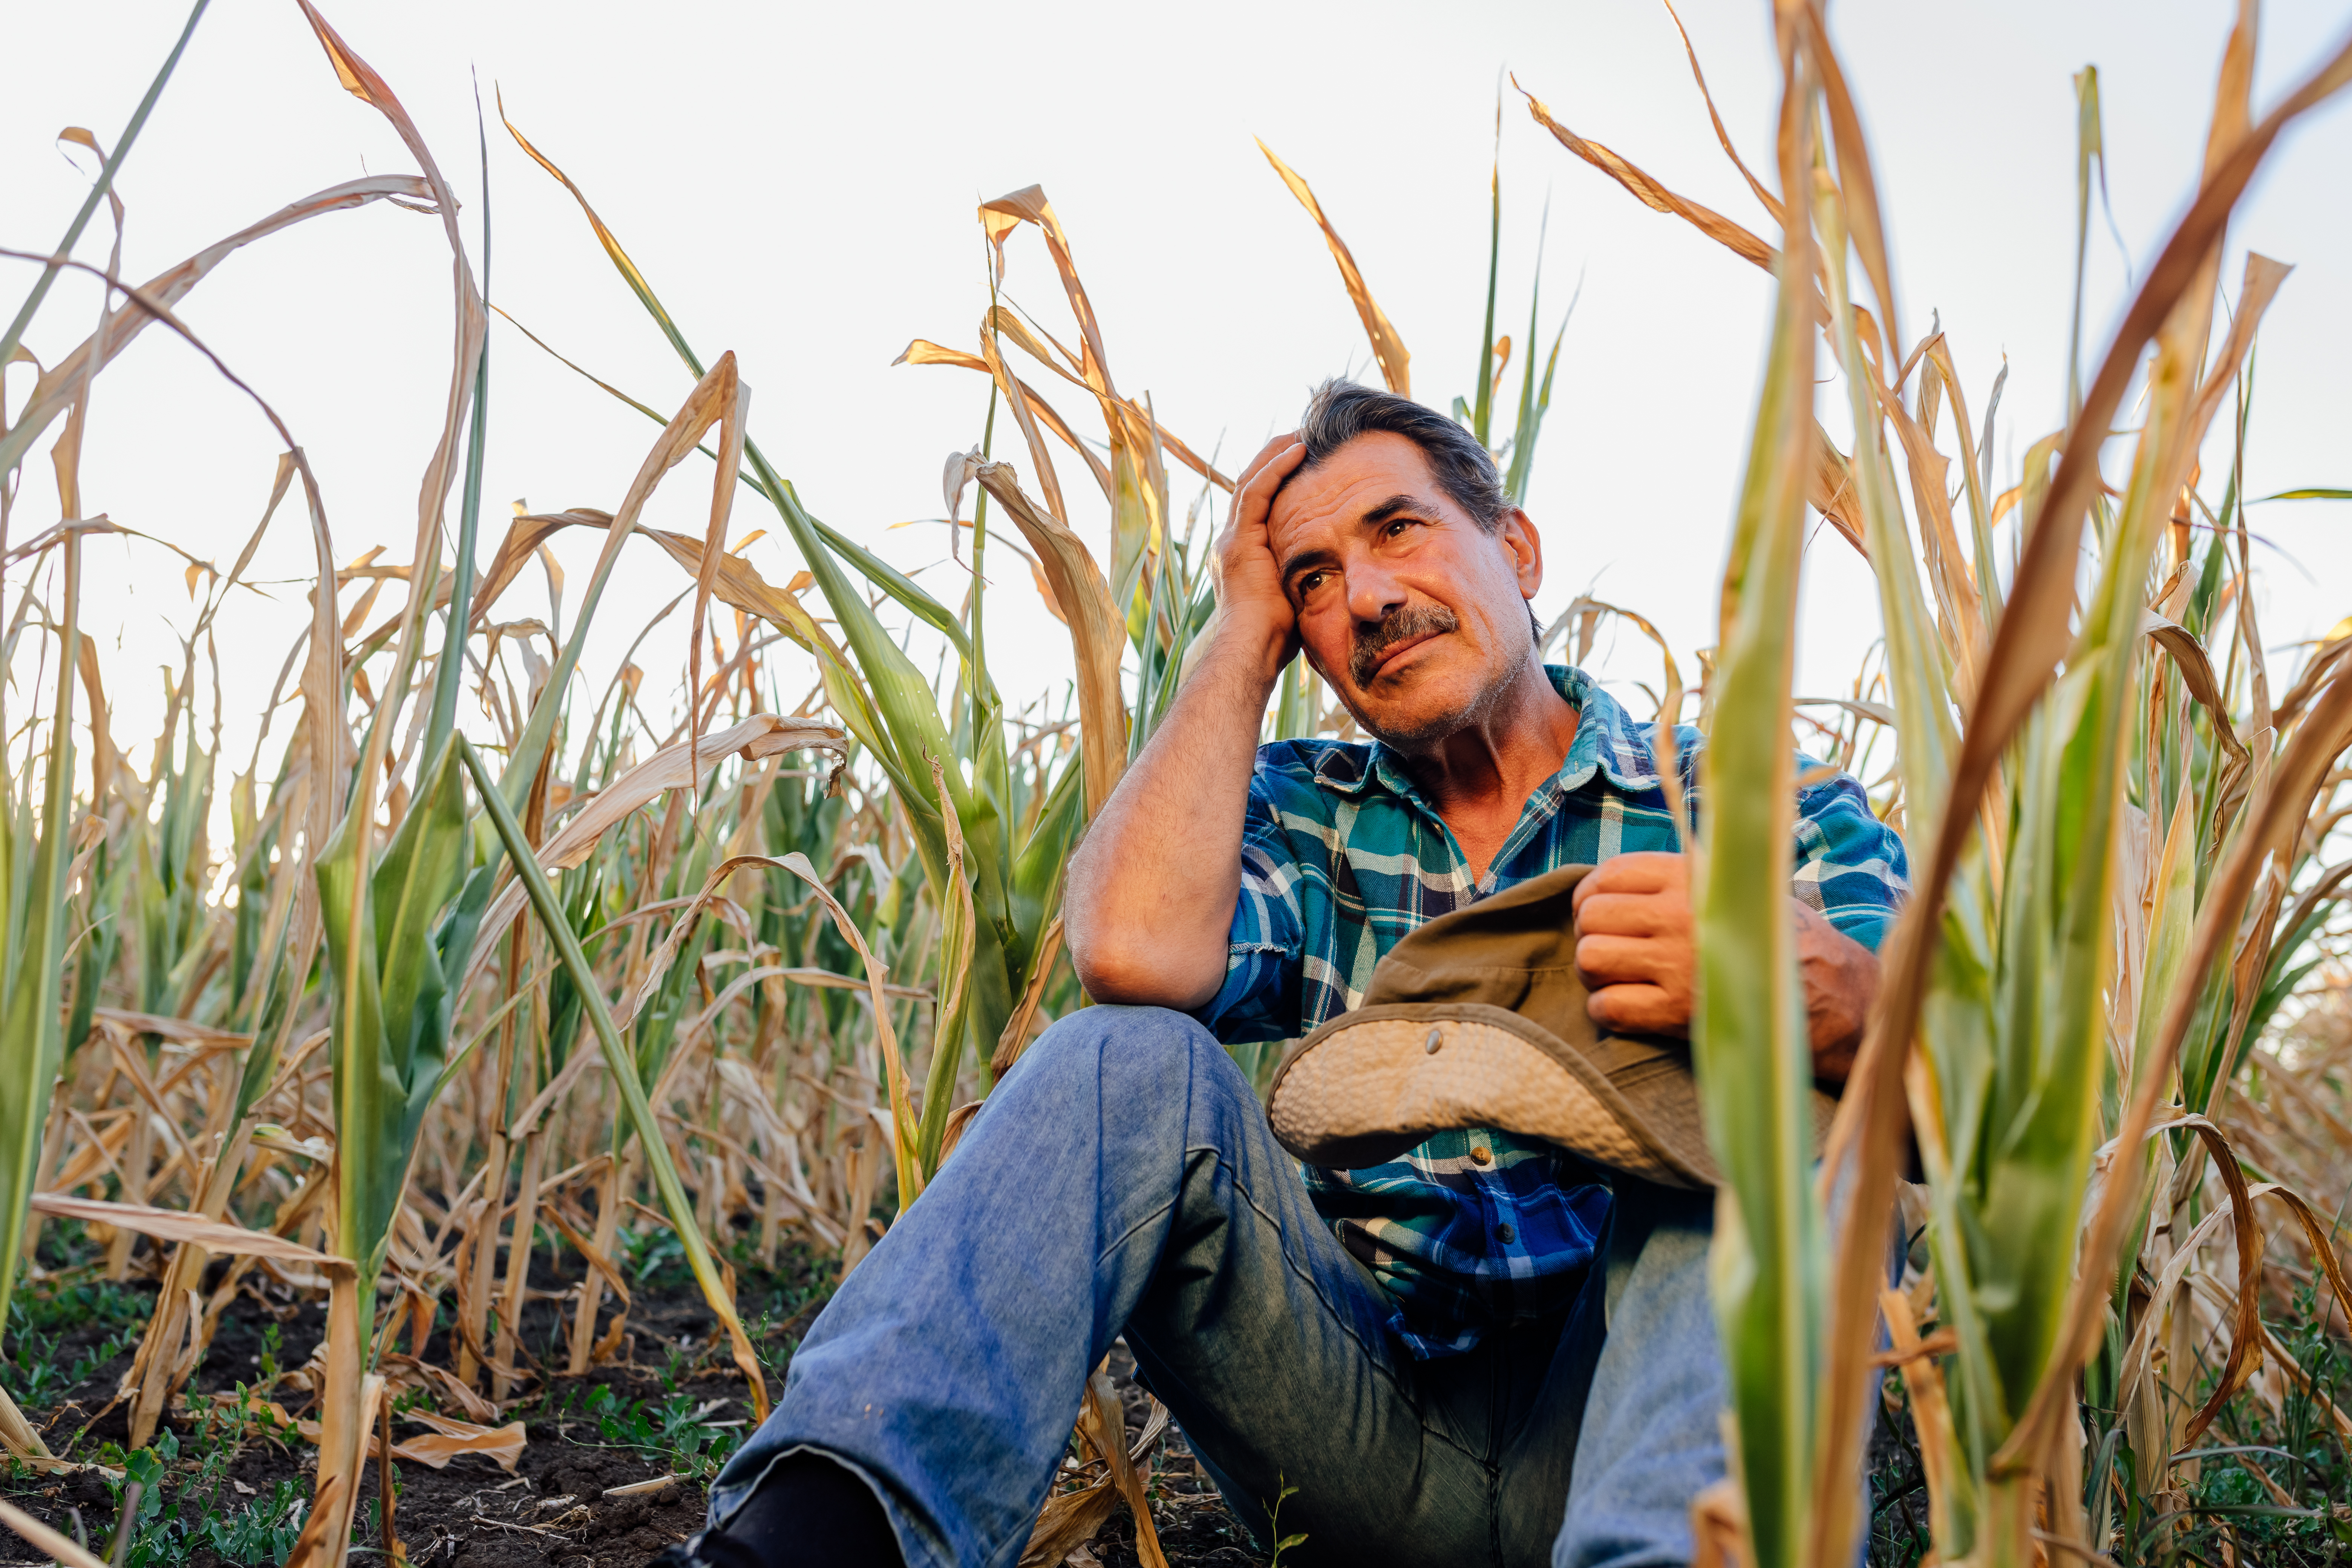 A lonely farmer | Source: Shutterstock